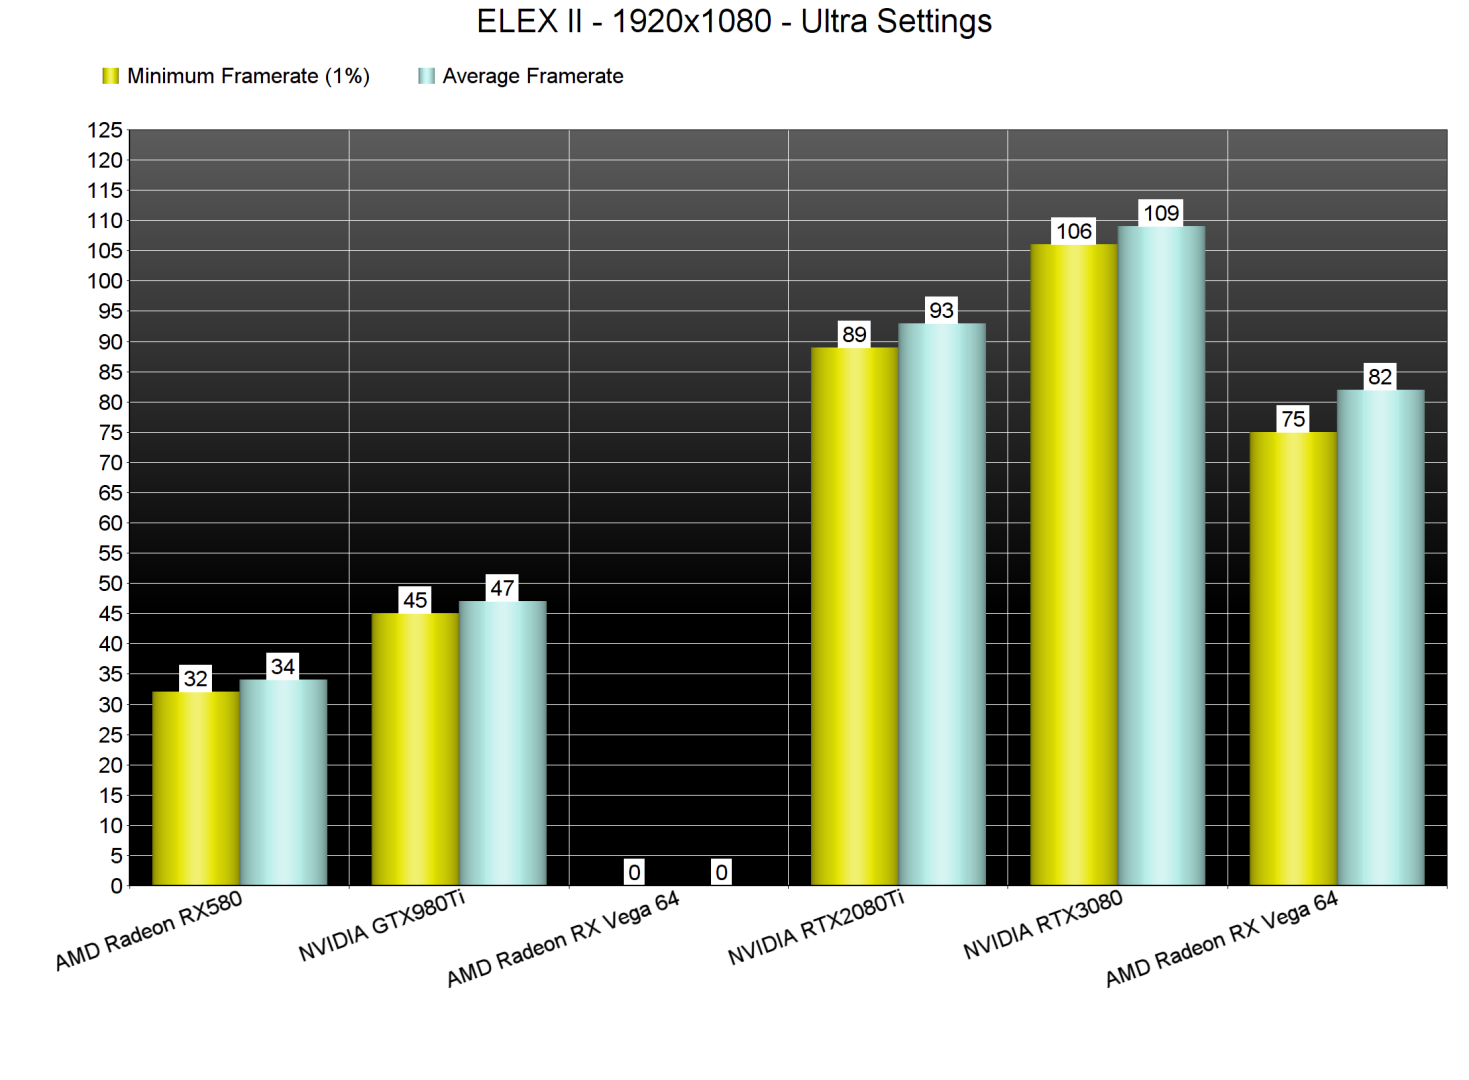 ELEX II GPU benchmarks-1